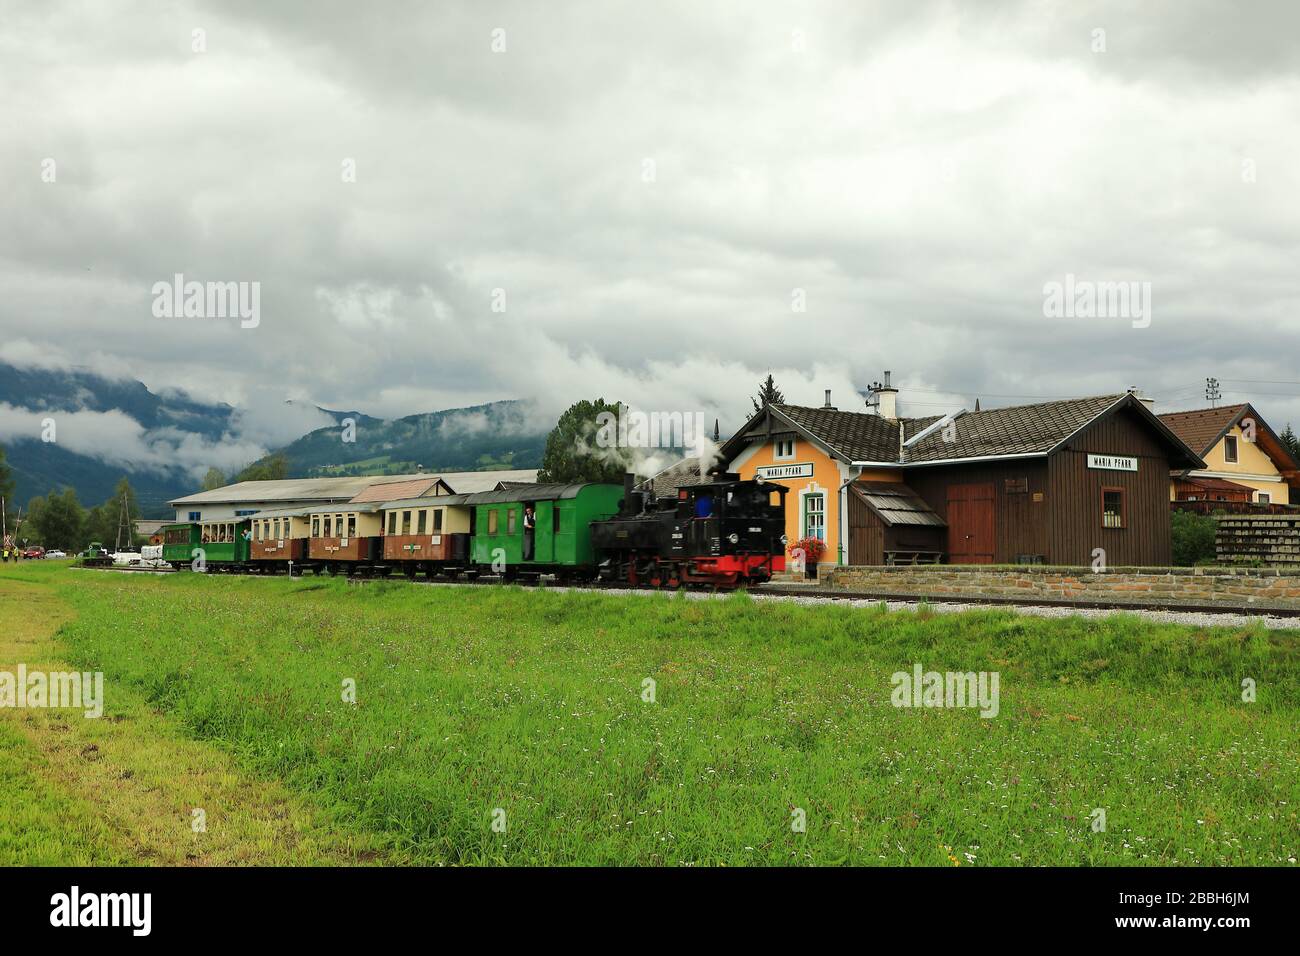 Taurachbahn with steam train in action Stock Photo